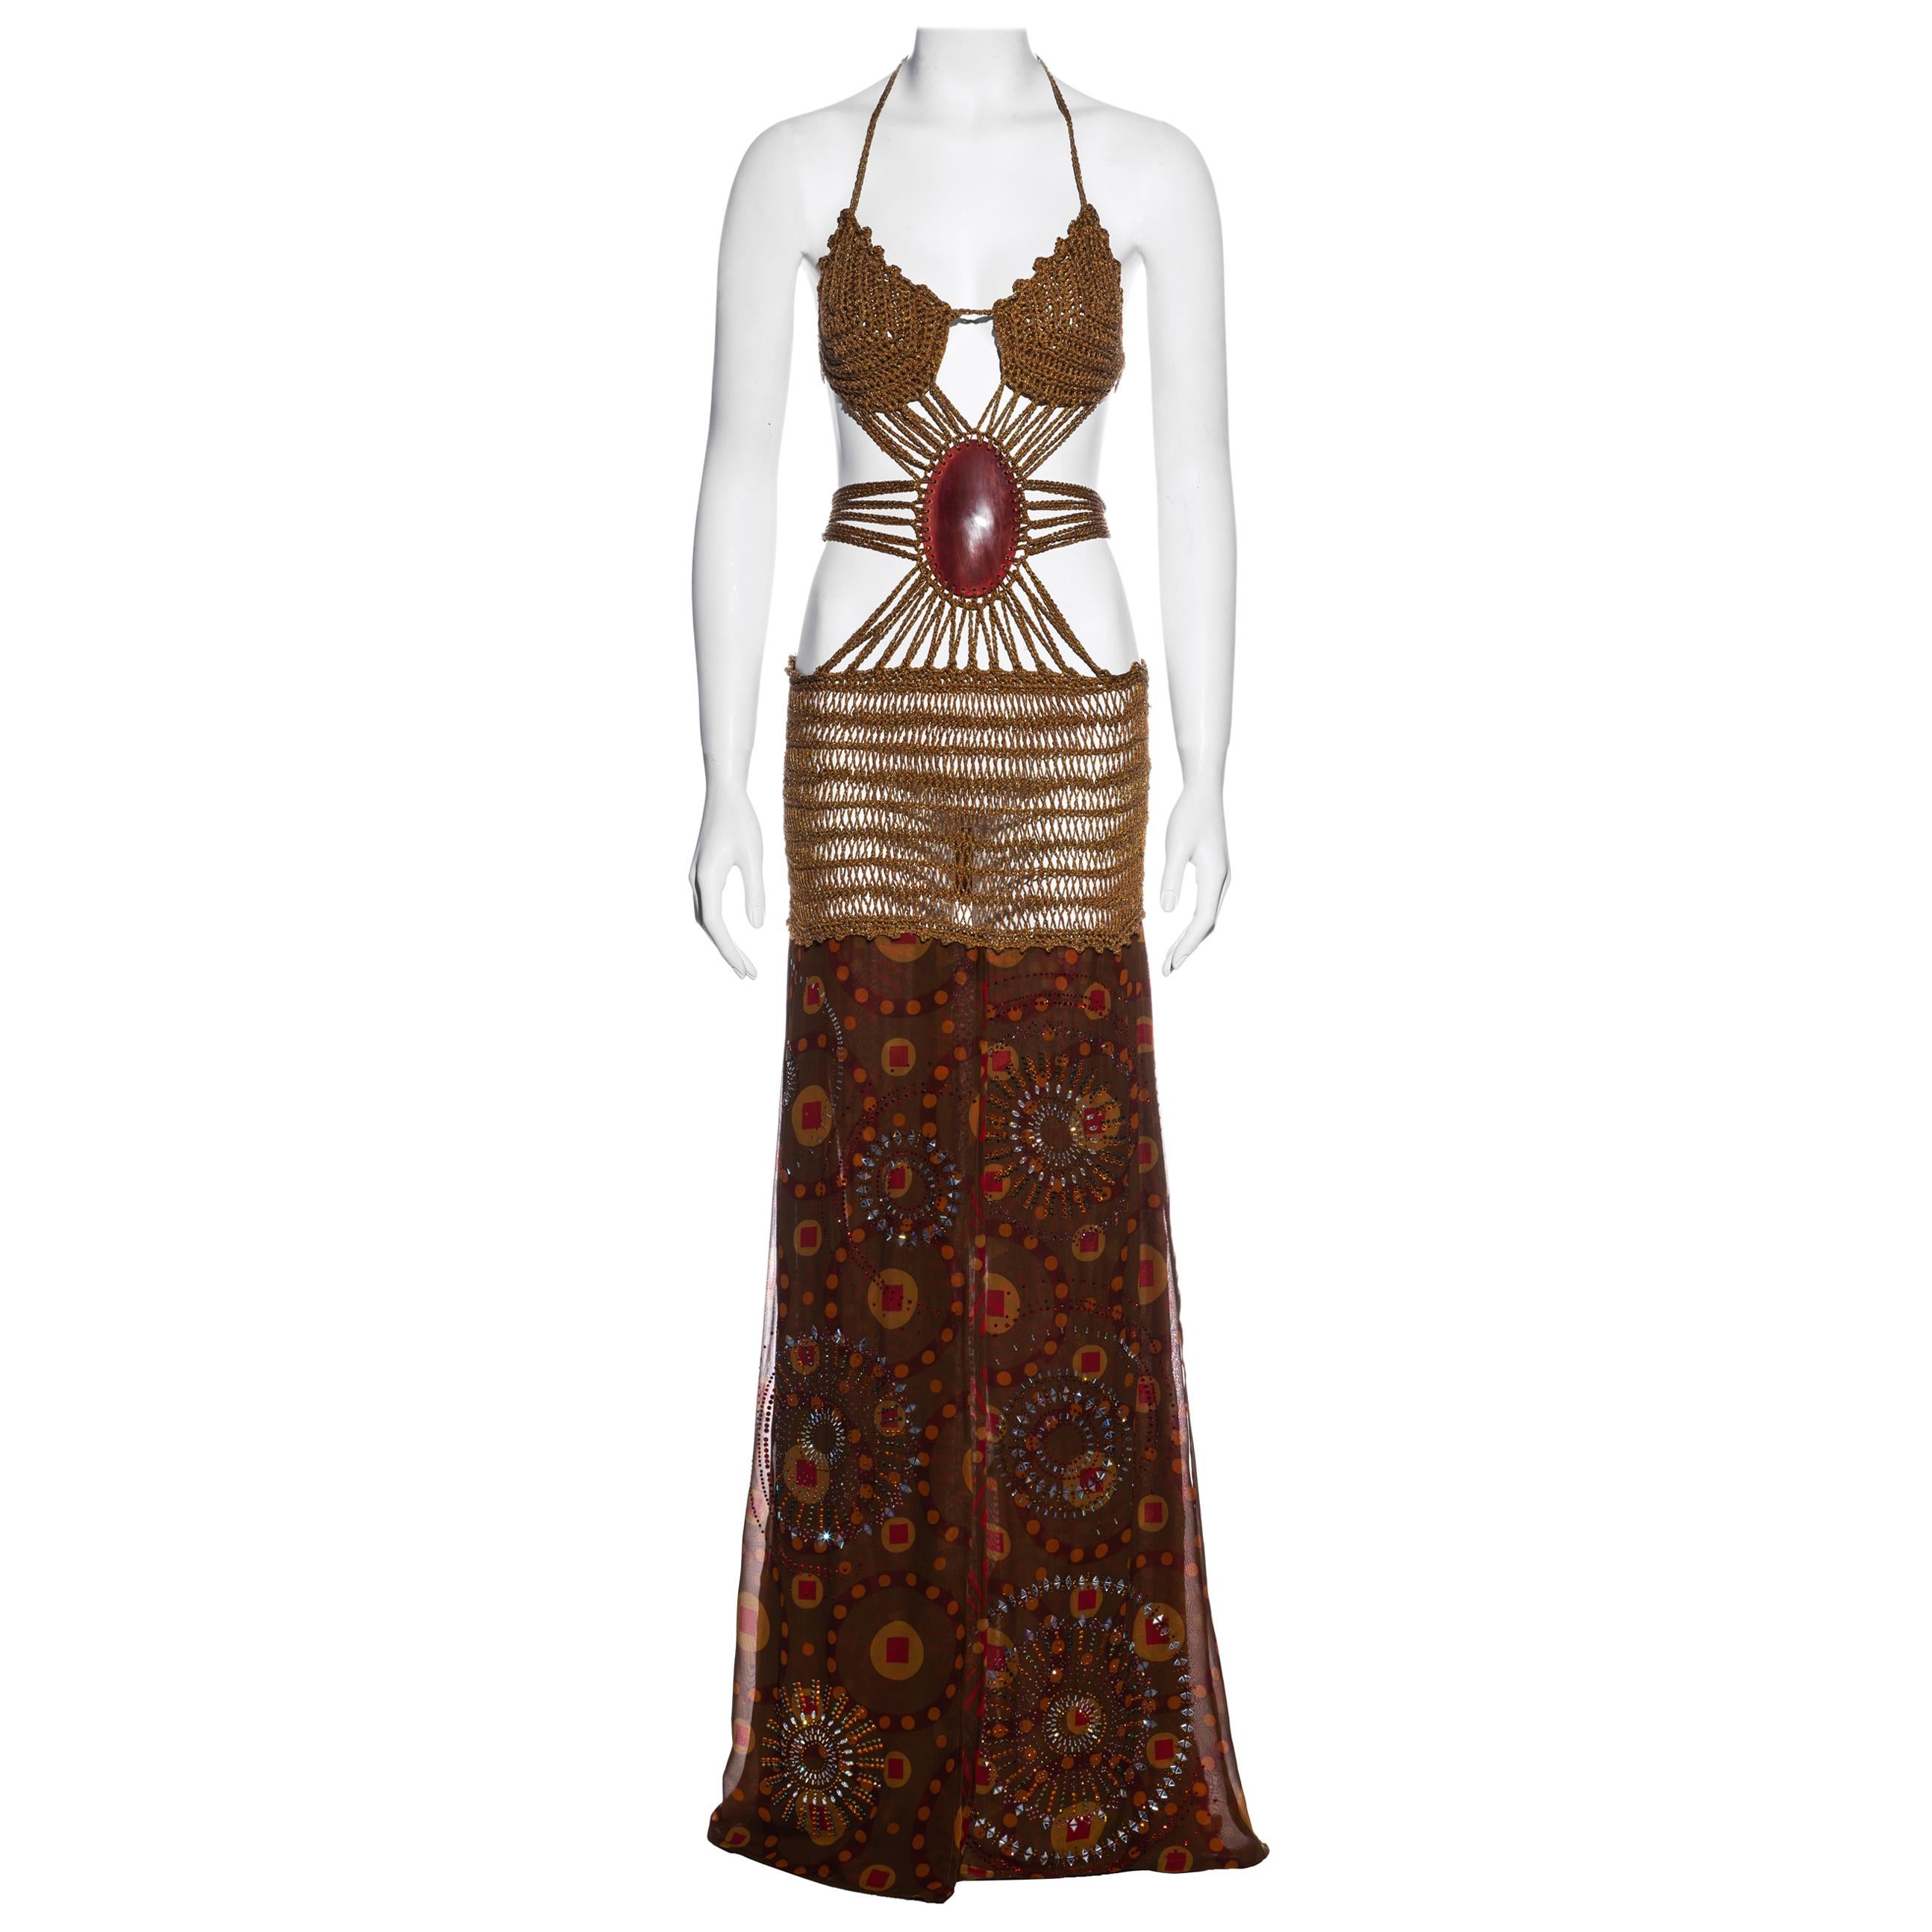 Gianfranco Ferre crochet maxi dress with jewelled silk skirt, ss 2004